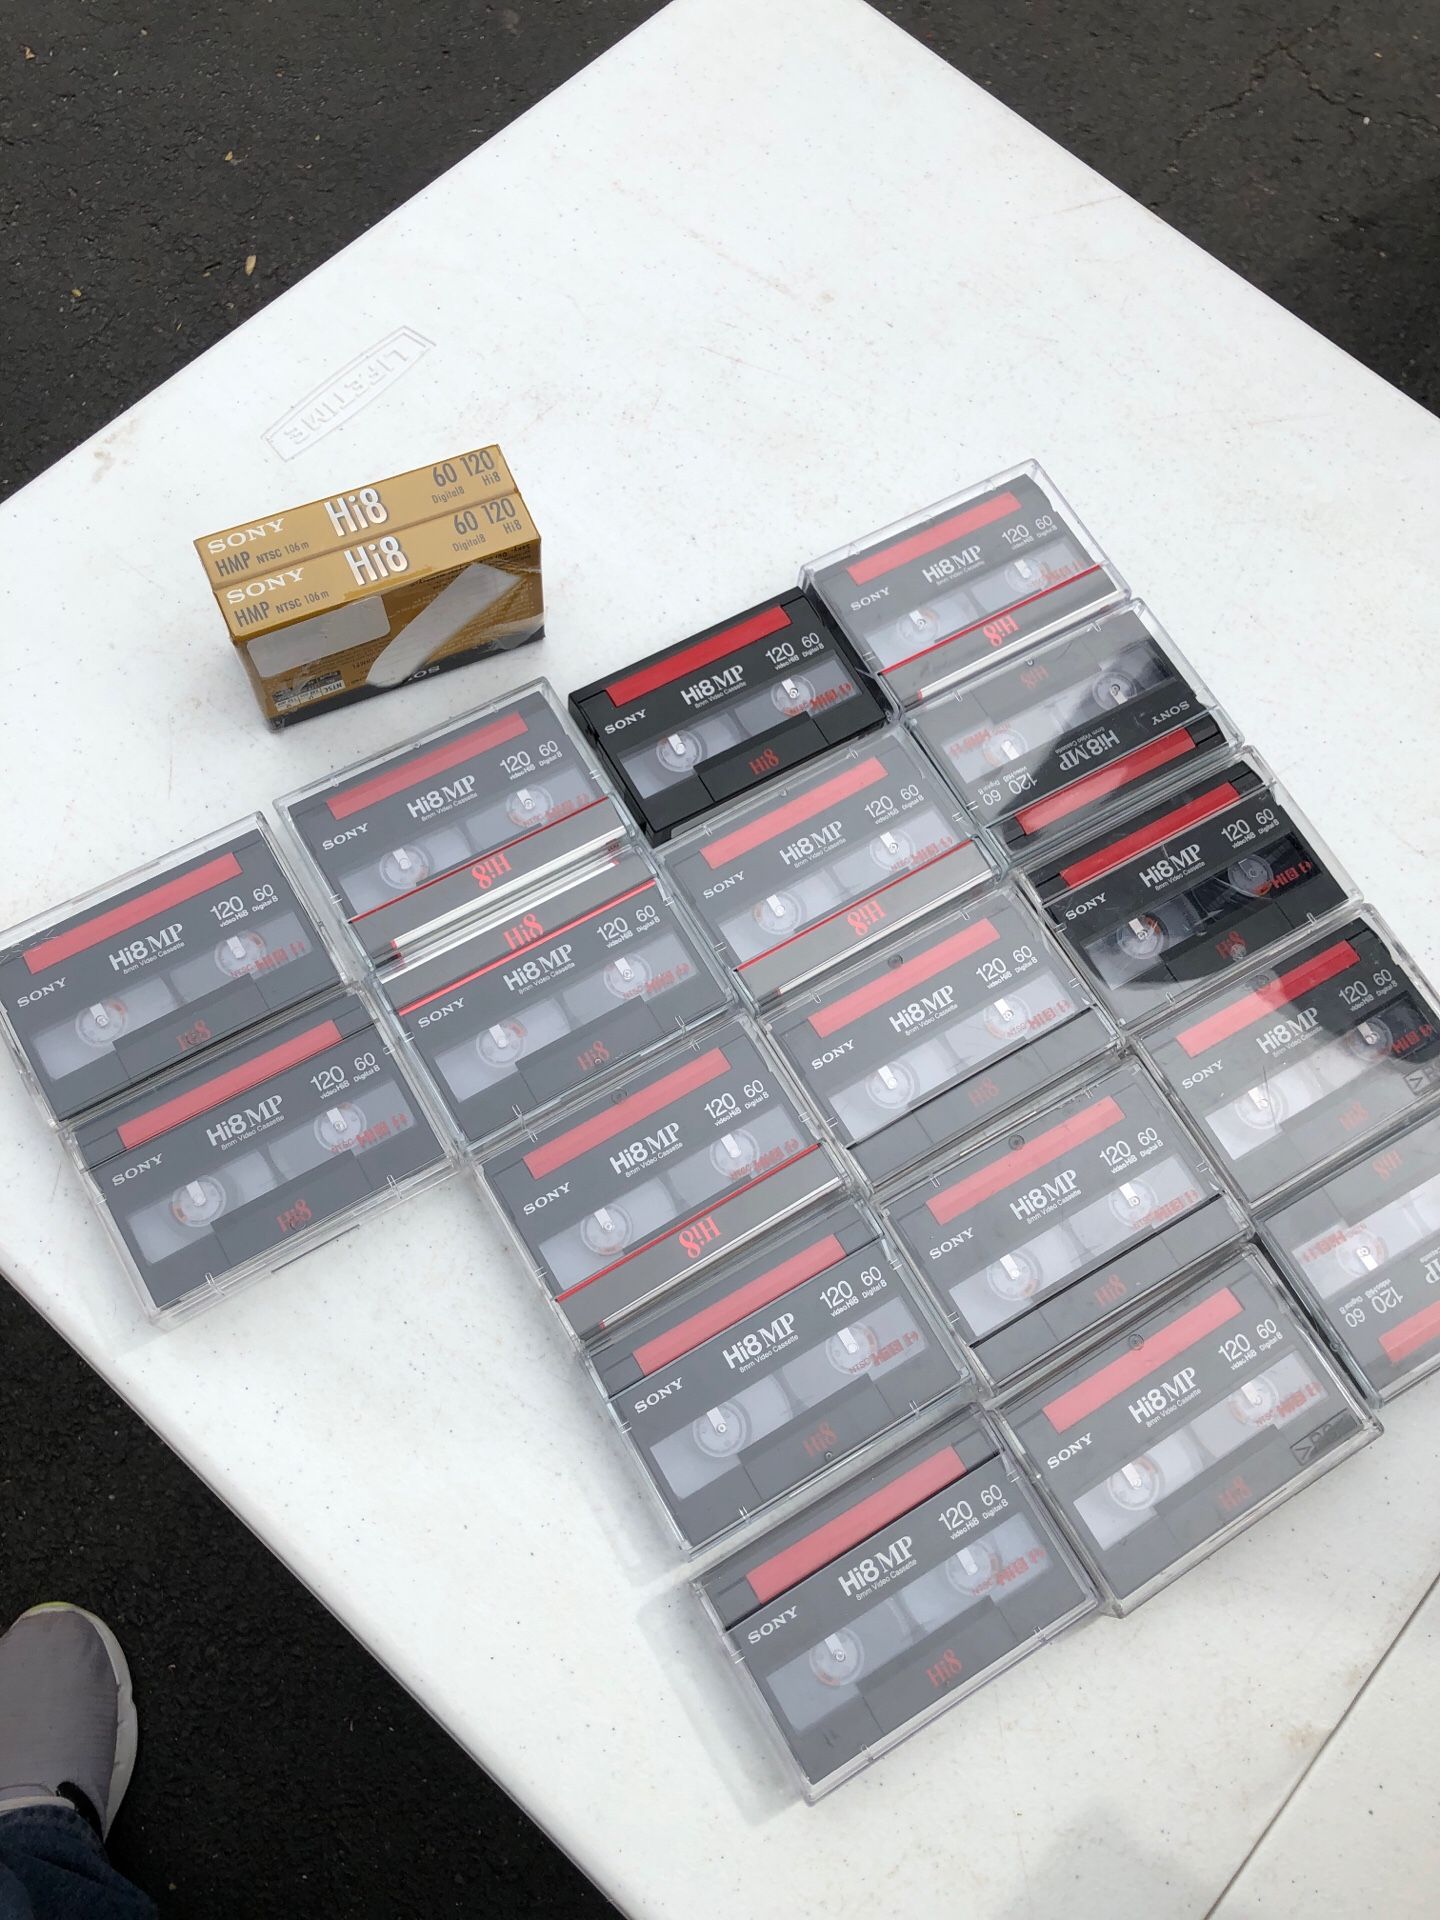 Hi8 MP video cassette set 19